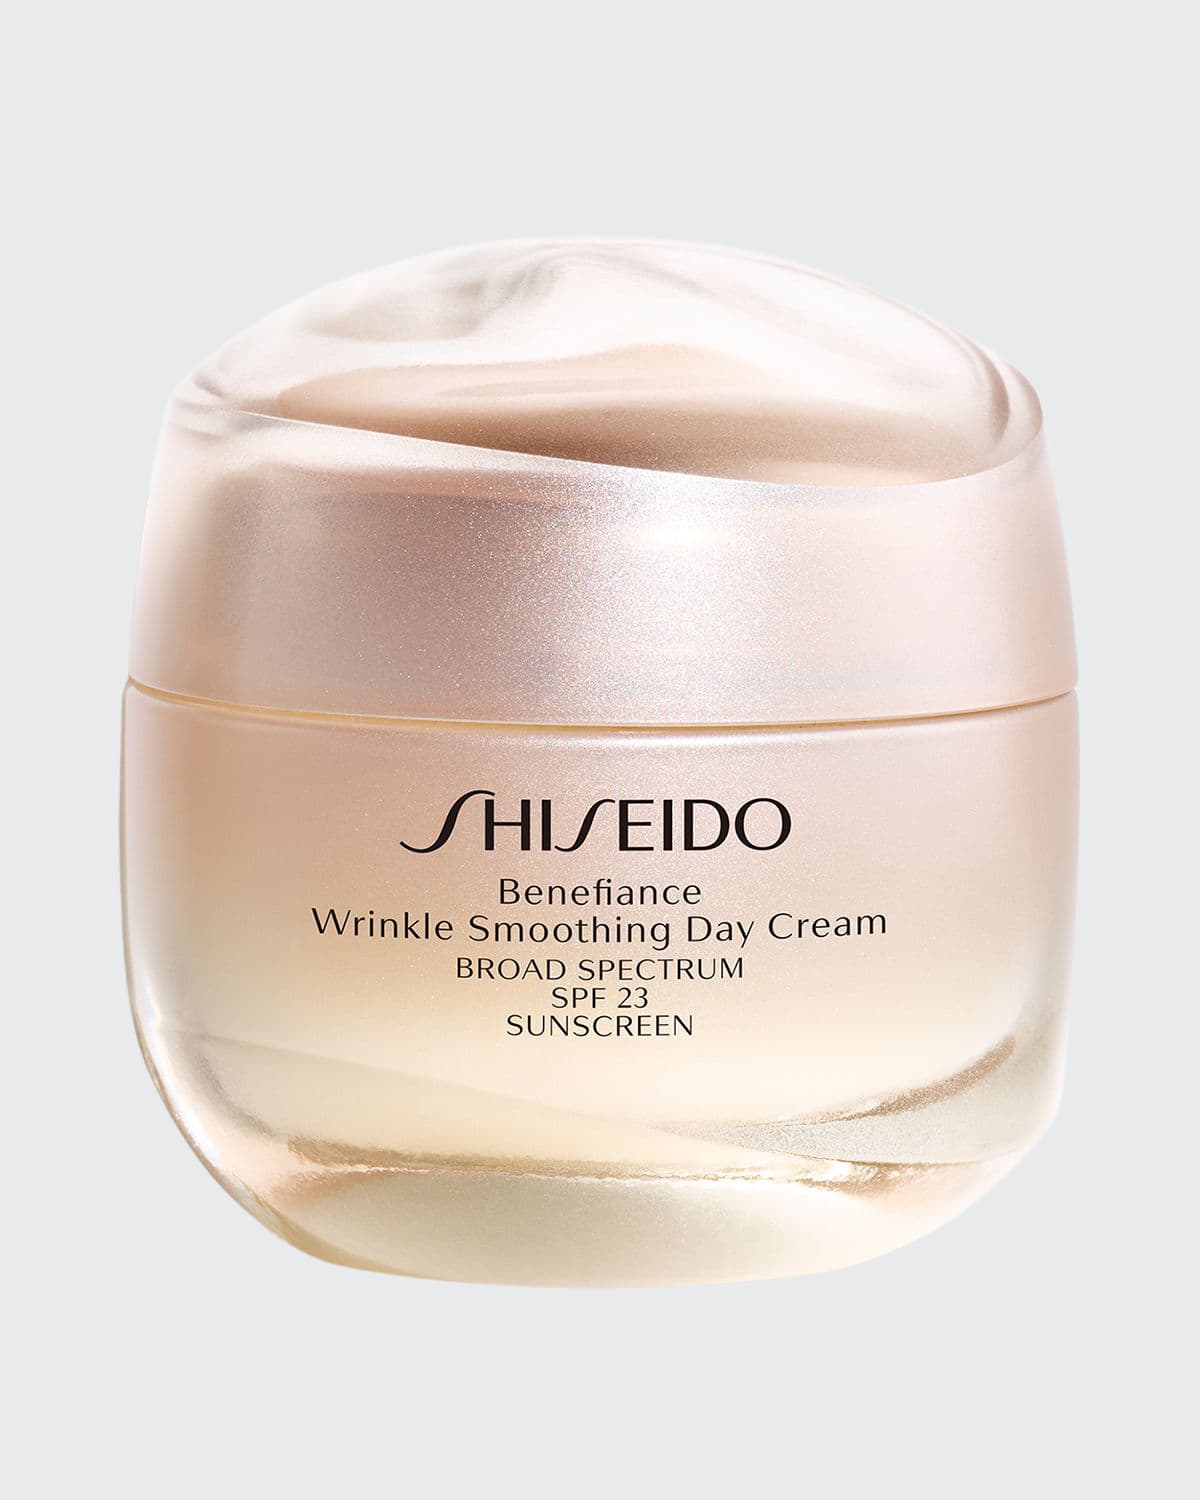 Benefiance Wrinkle Smoothing Day Cream SPF 23, 1.7 oz.